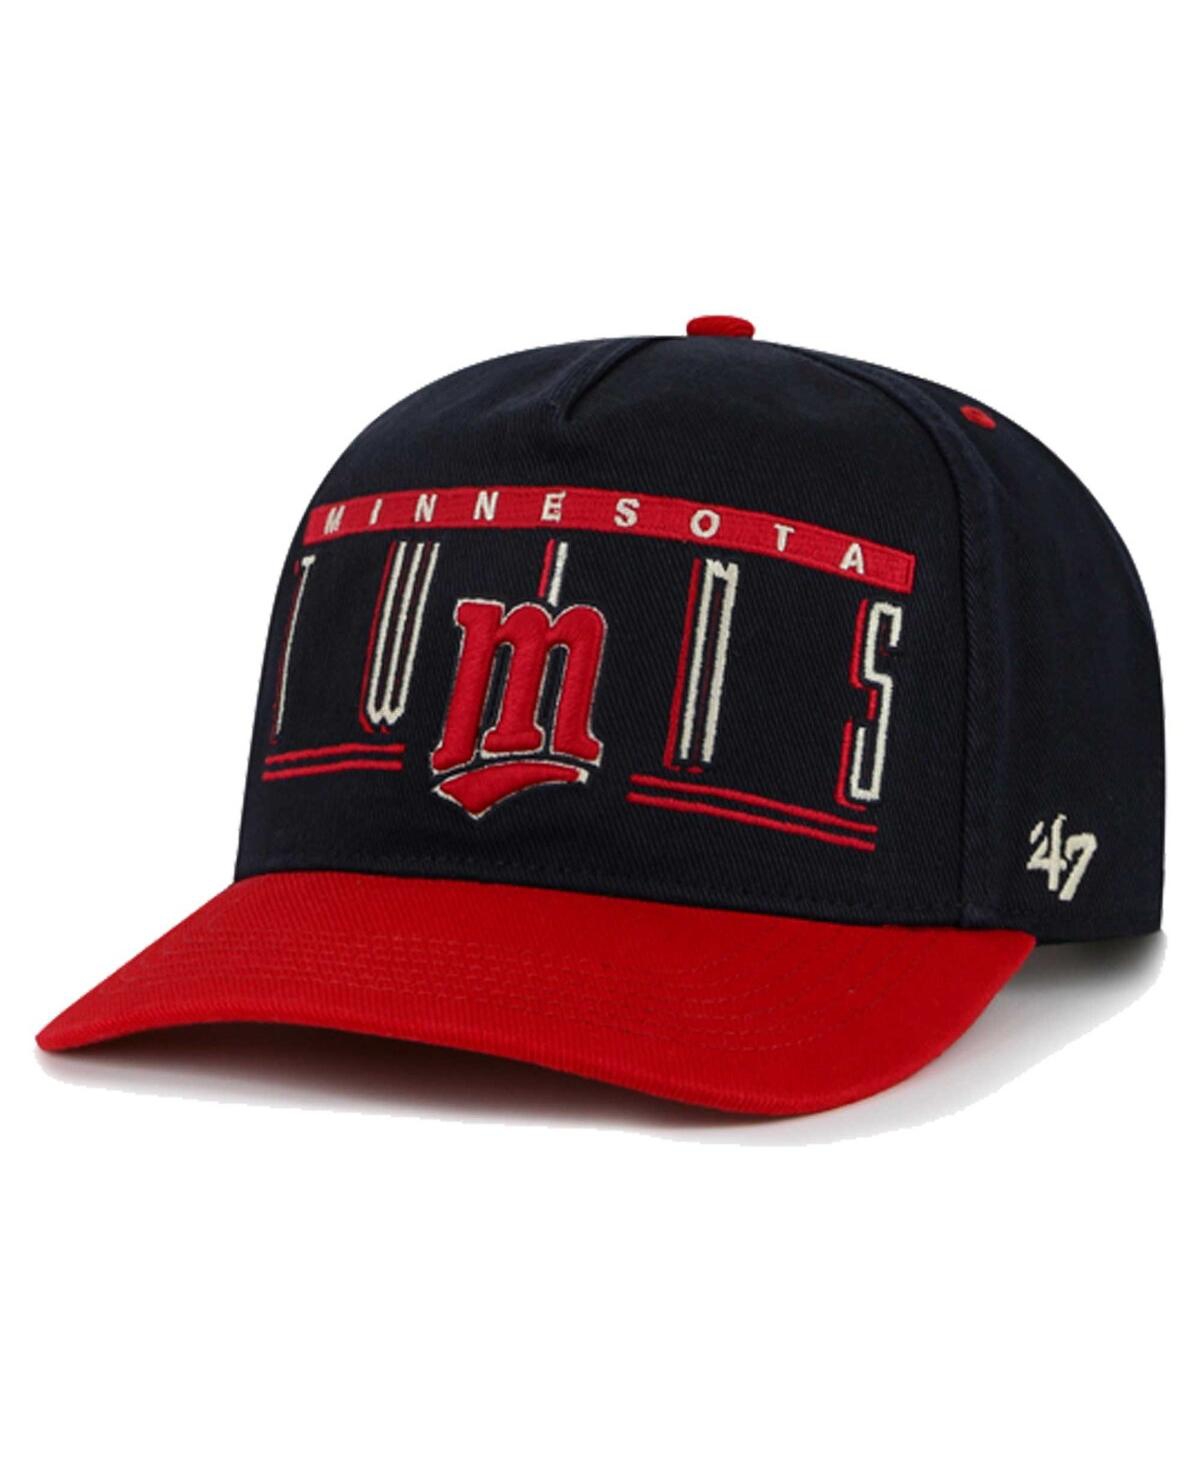 47 Brand Men's Navy Minnesota Twins Double Headed Baseline Hitch Adjustable Hat - Navy